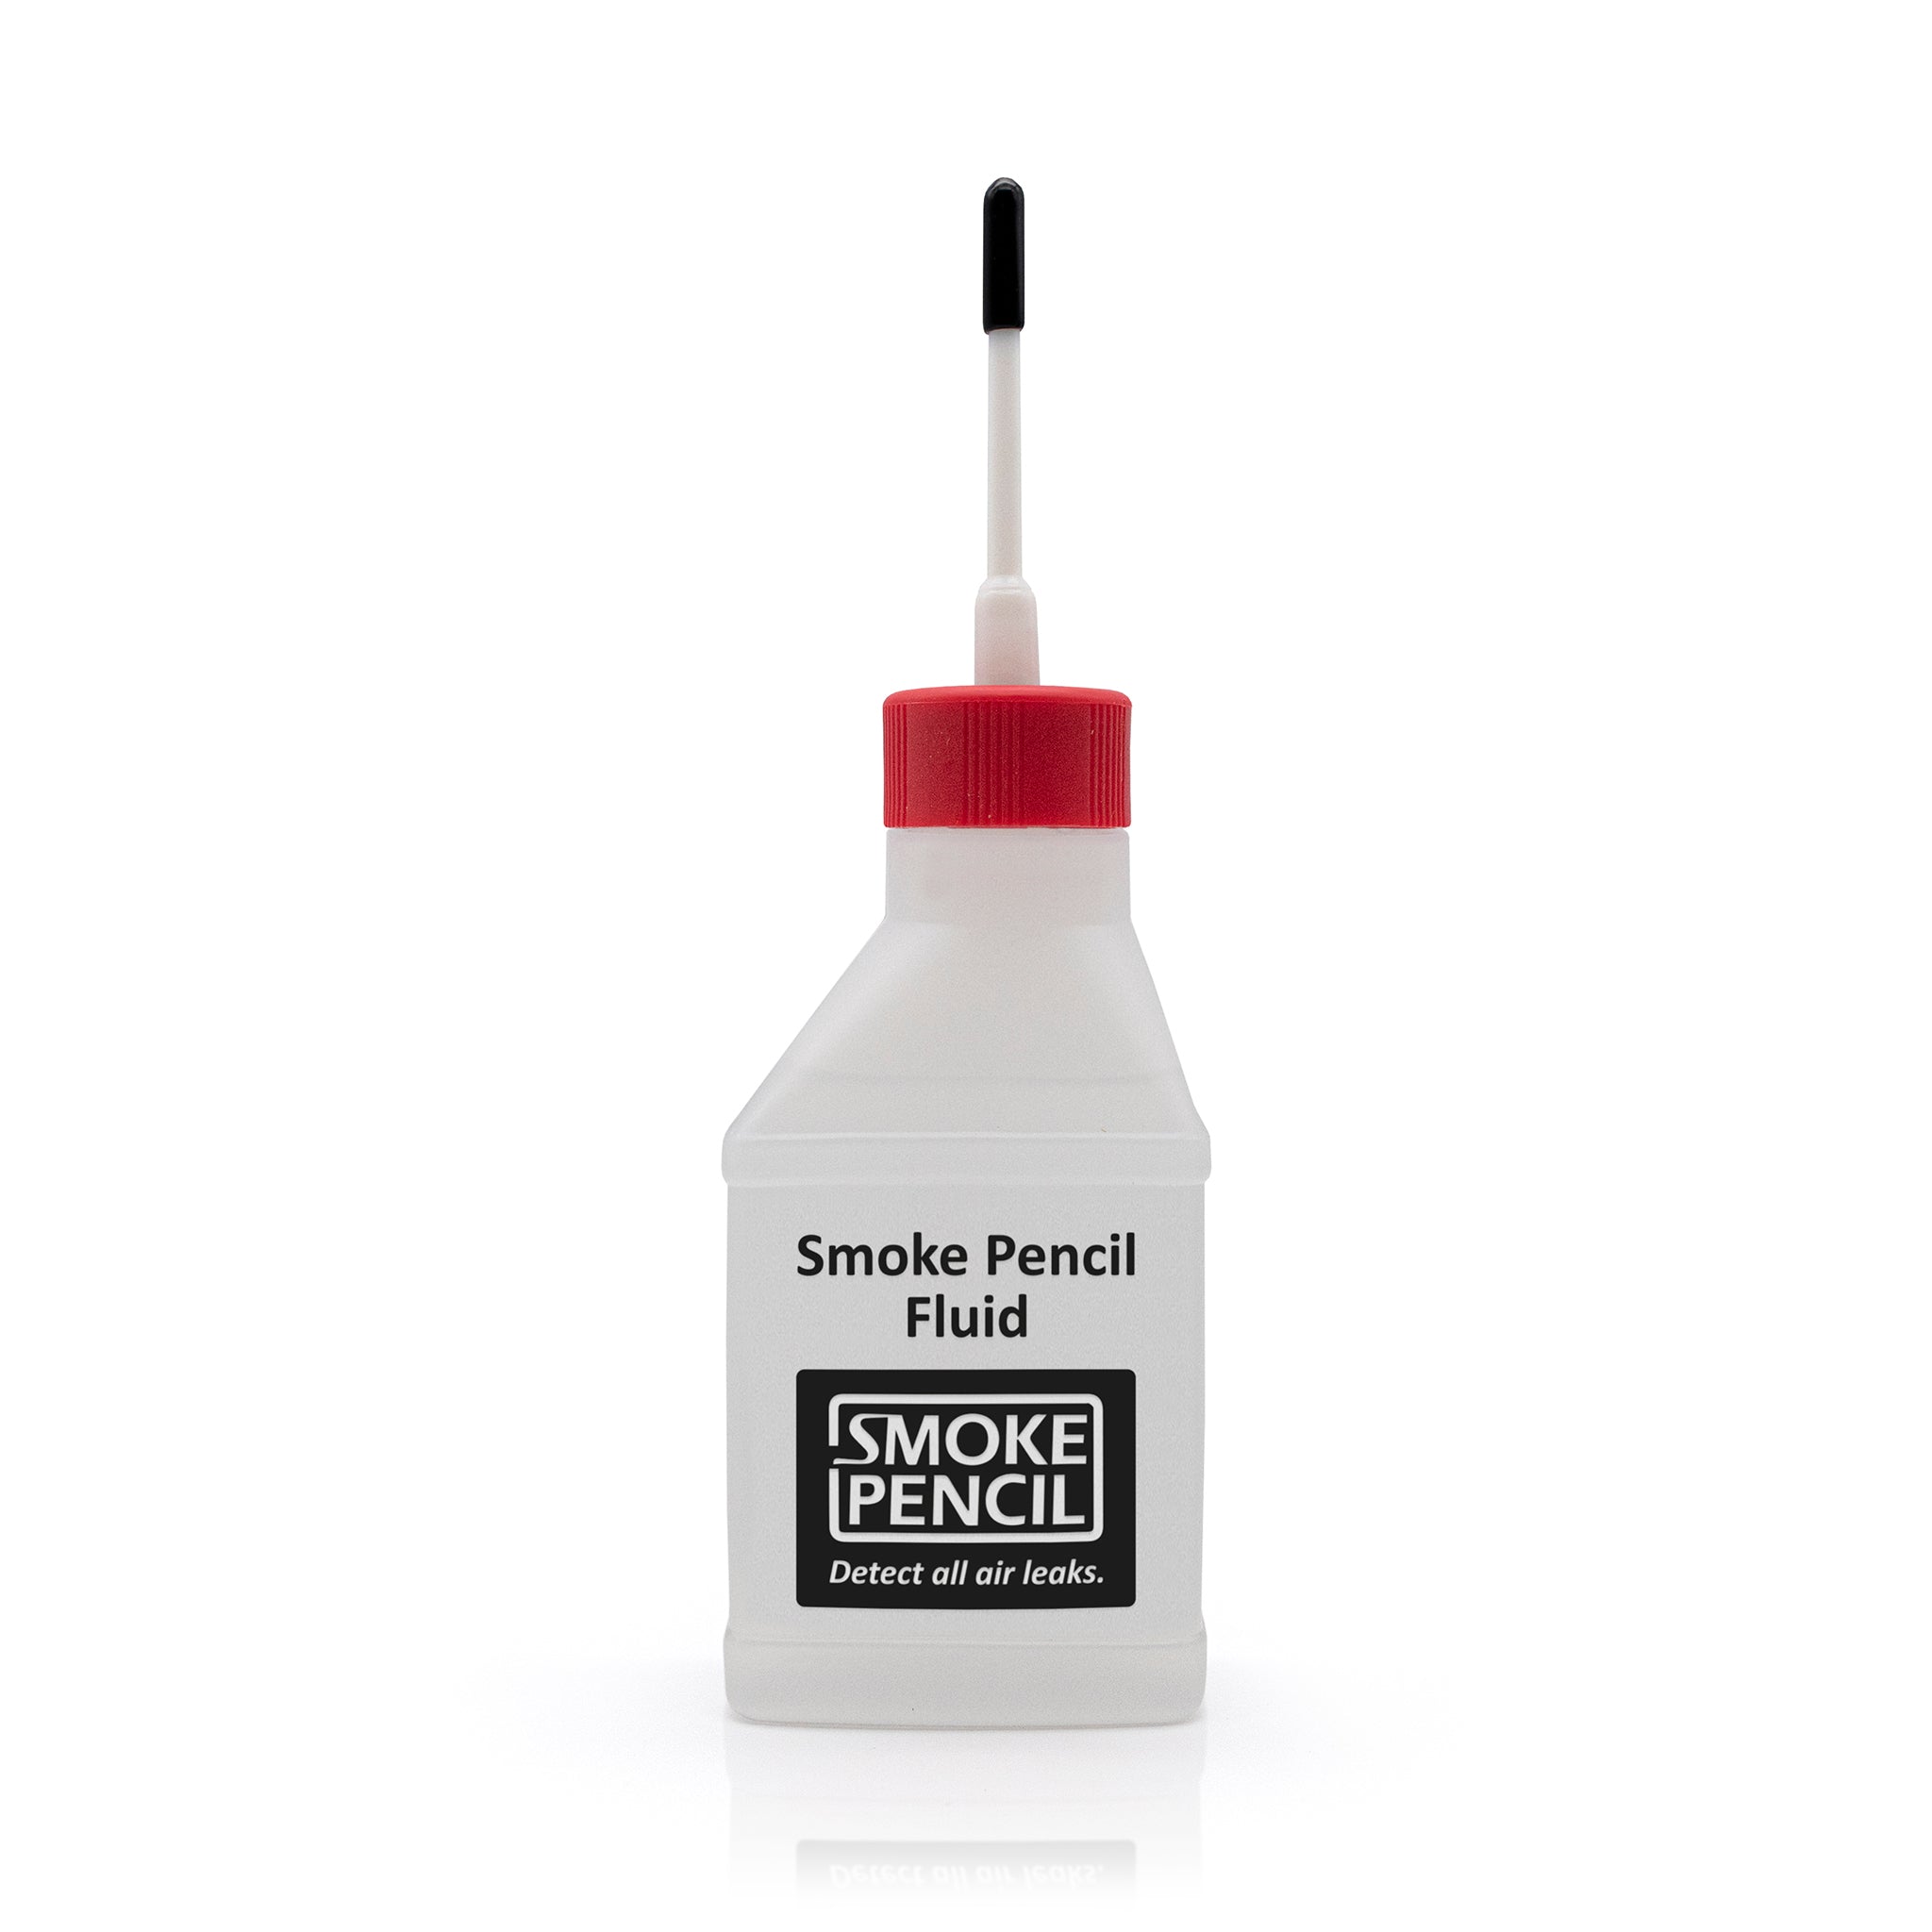 Smoke Pencil refill fluid